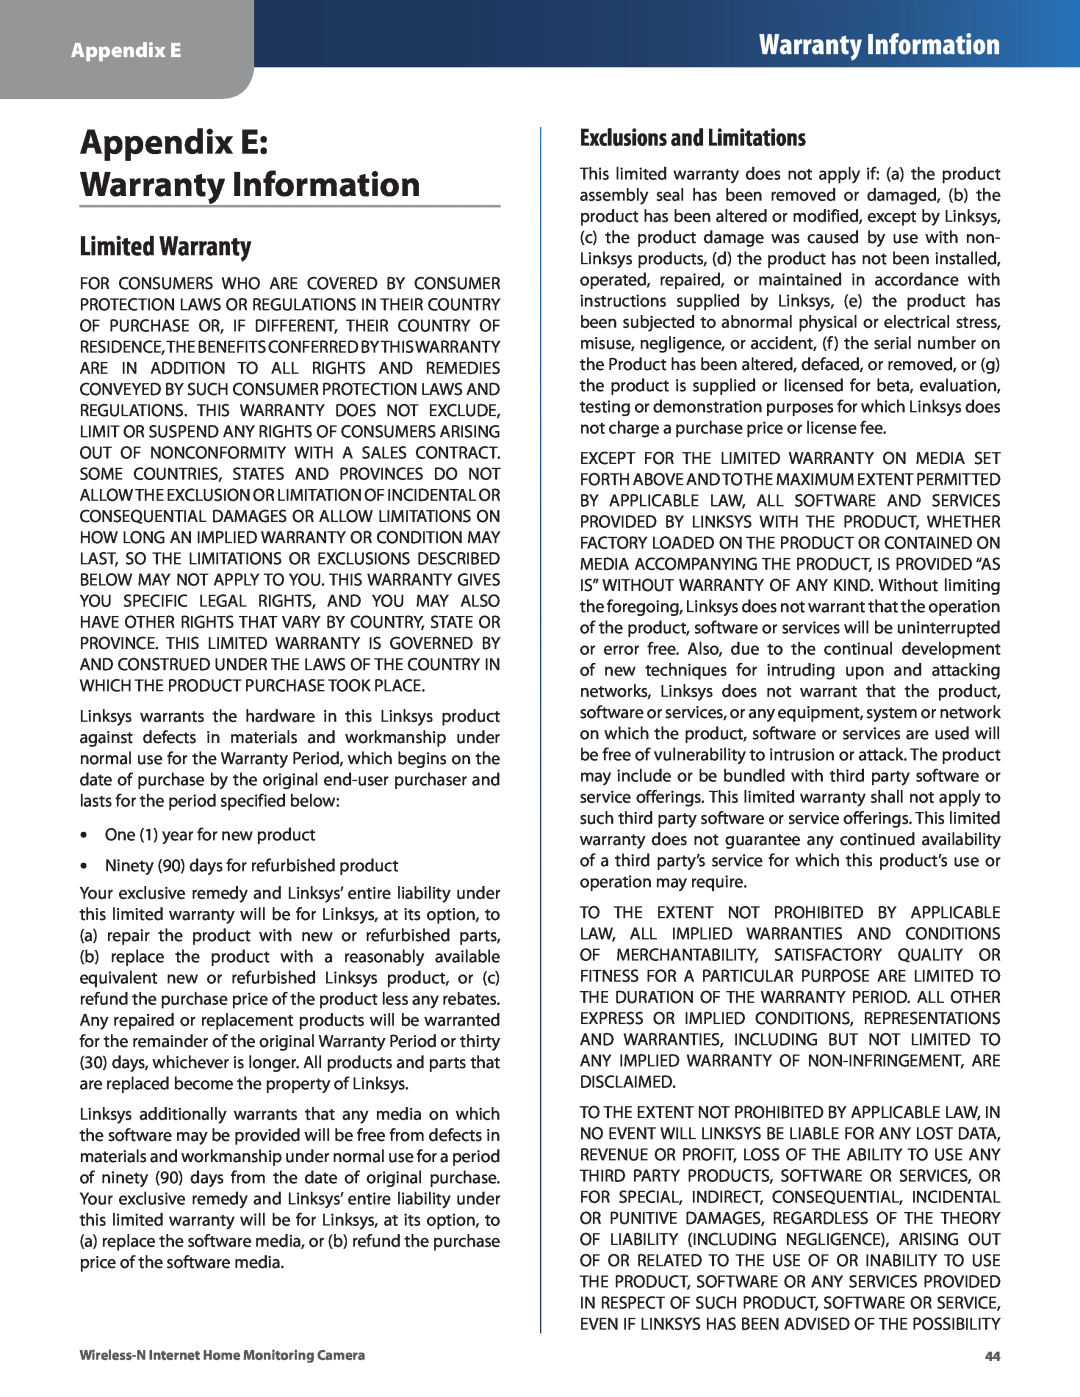 Cisco Systems WVC80N manual Appendix E: Warranty Information, Limited Warranty 